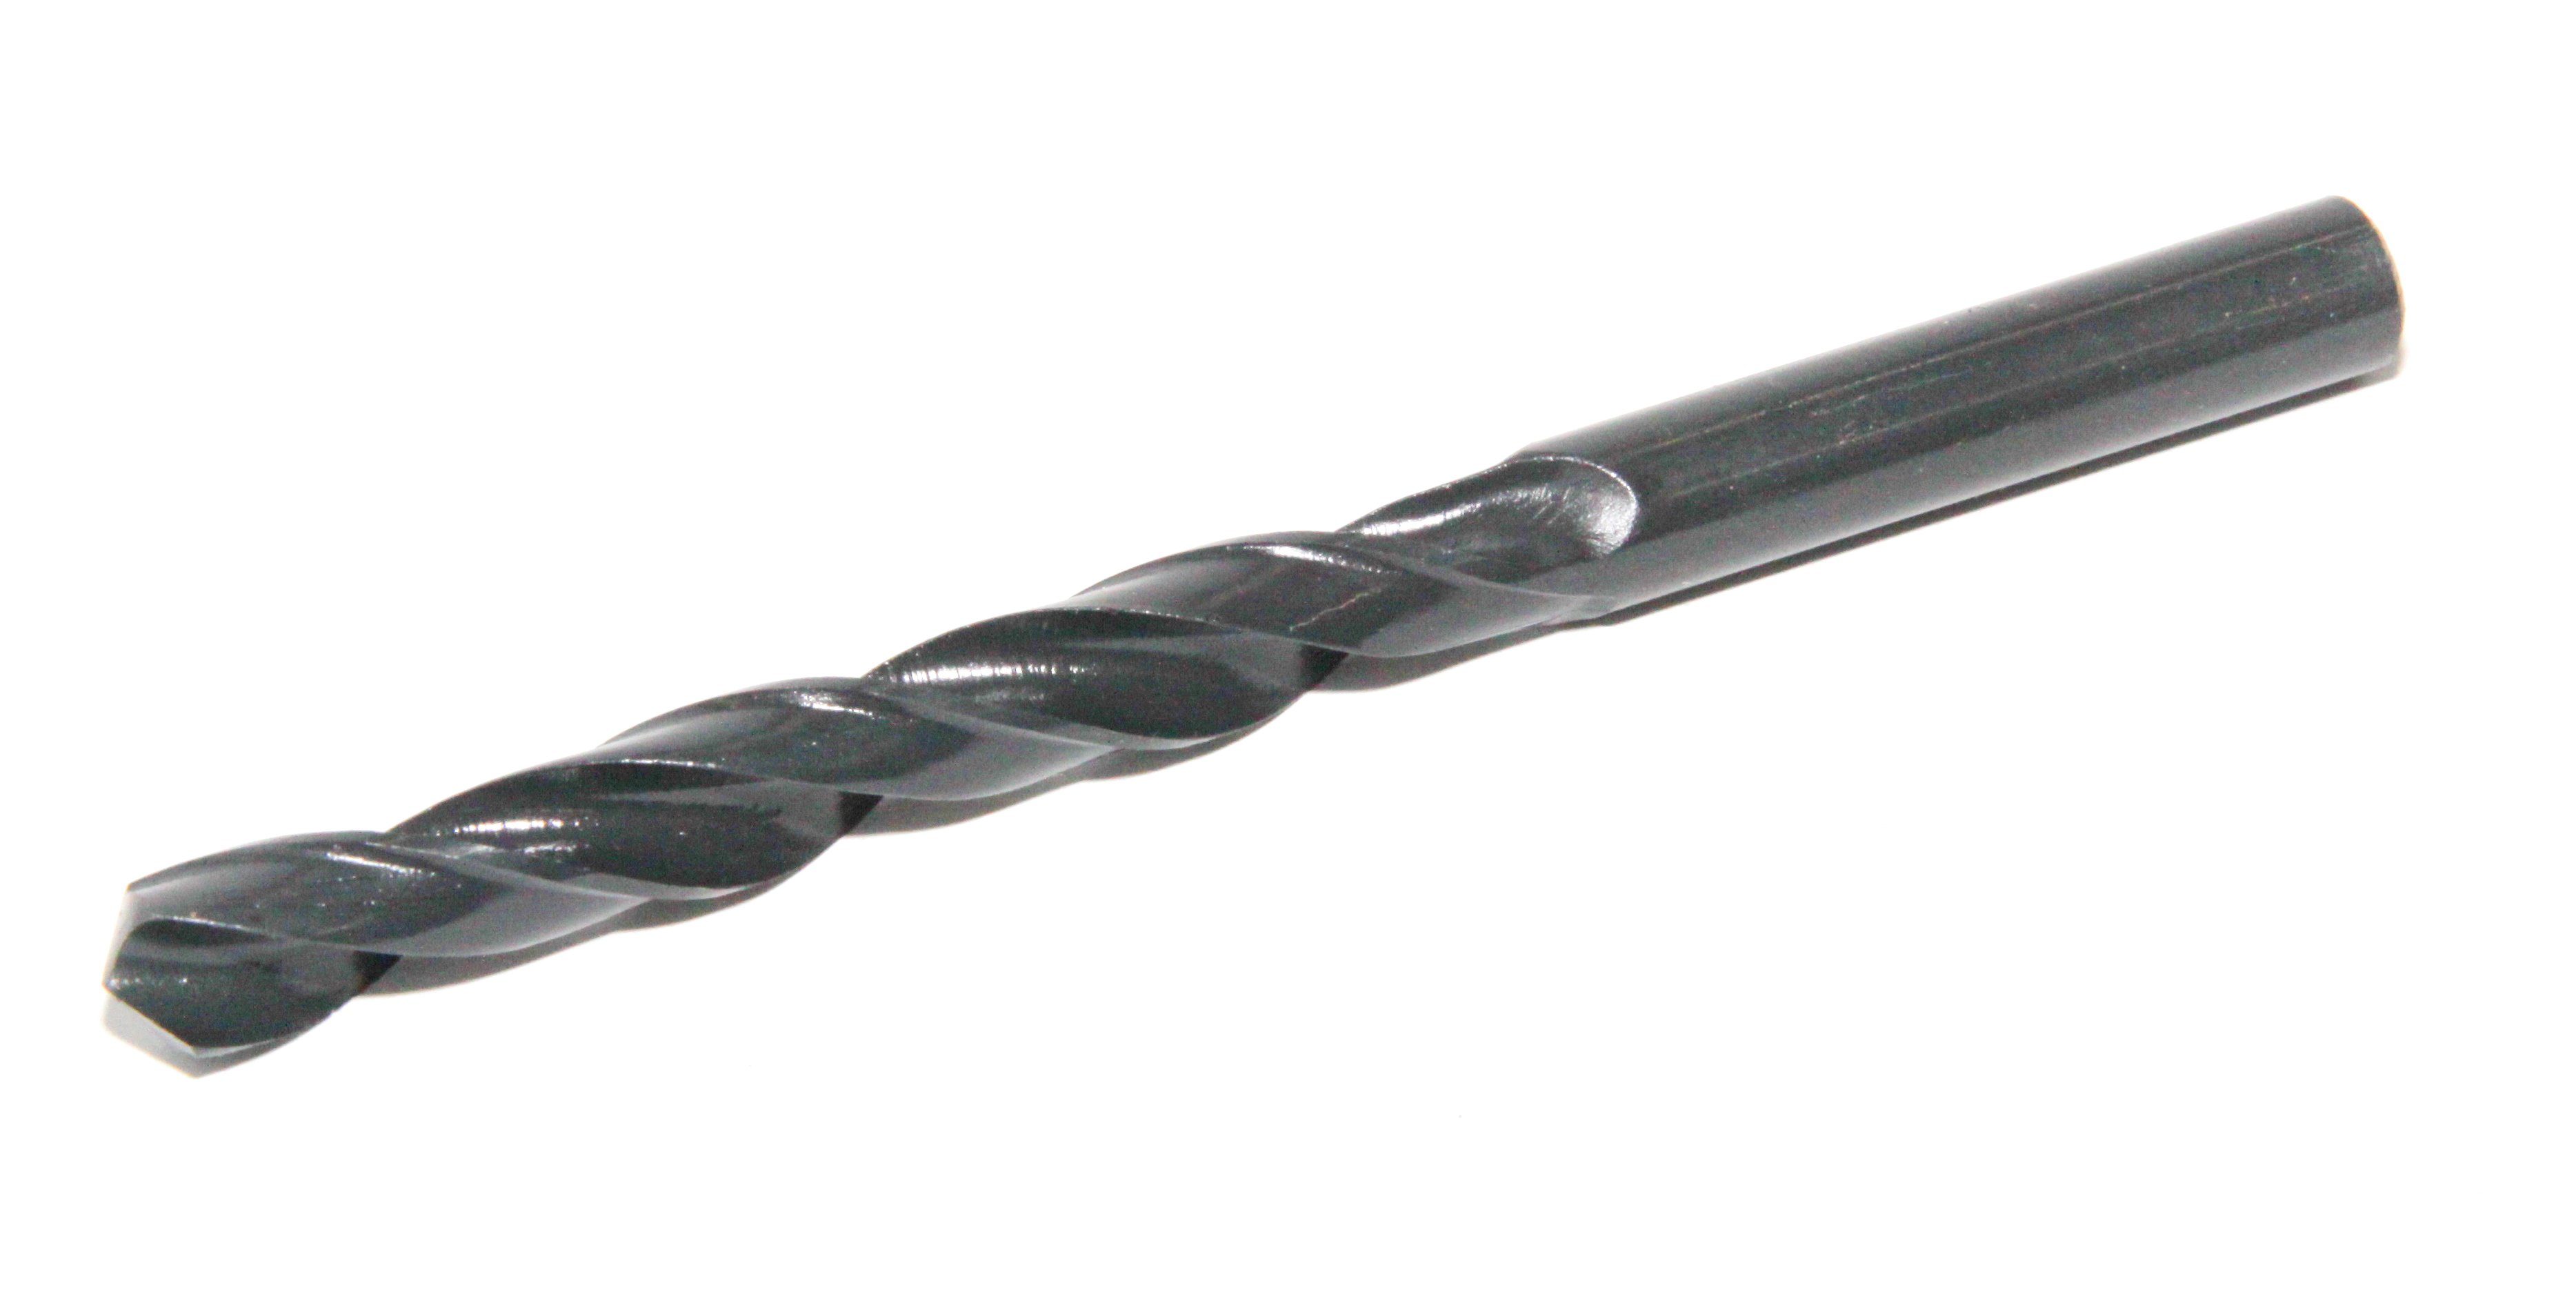 PeTools Metallbohrer HSS-R, 230tlg DIN338, Stahl-Bohrer, Stahlbohrer (230-tlg), HSS-R 1-13mm Spiralbohrer Metallbohrer Qualität